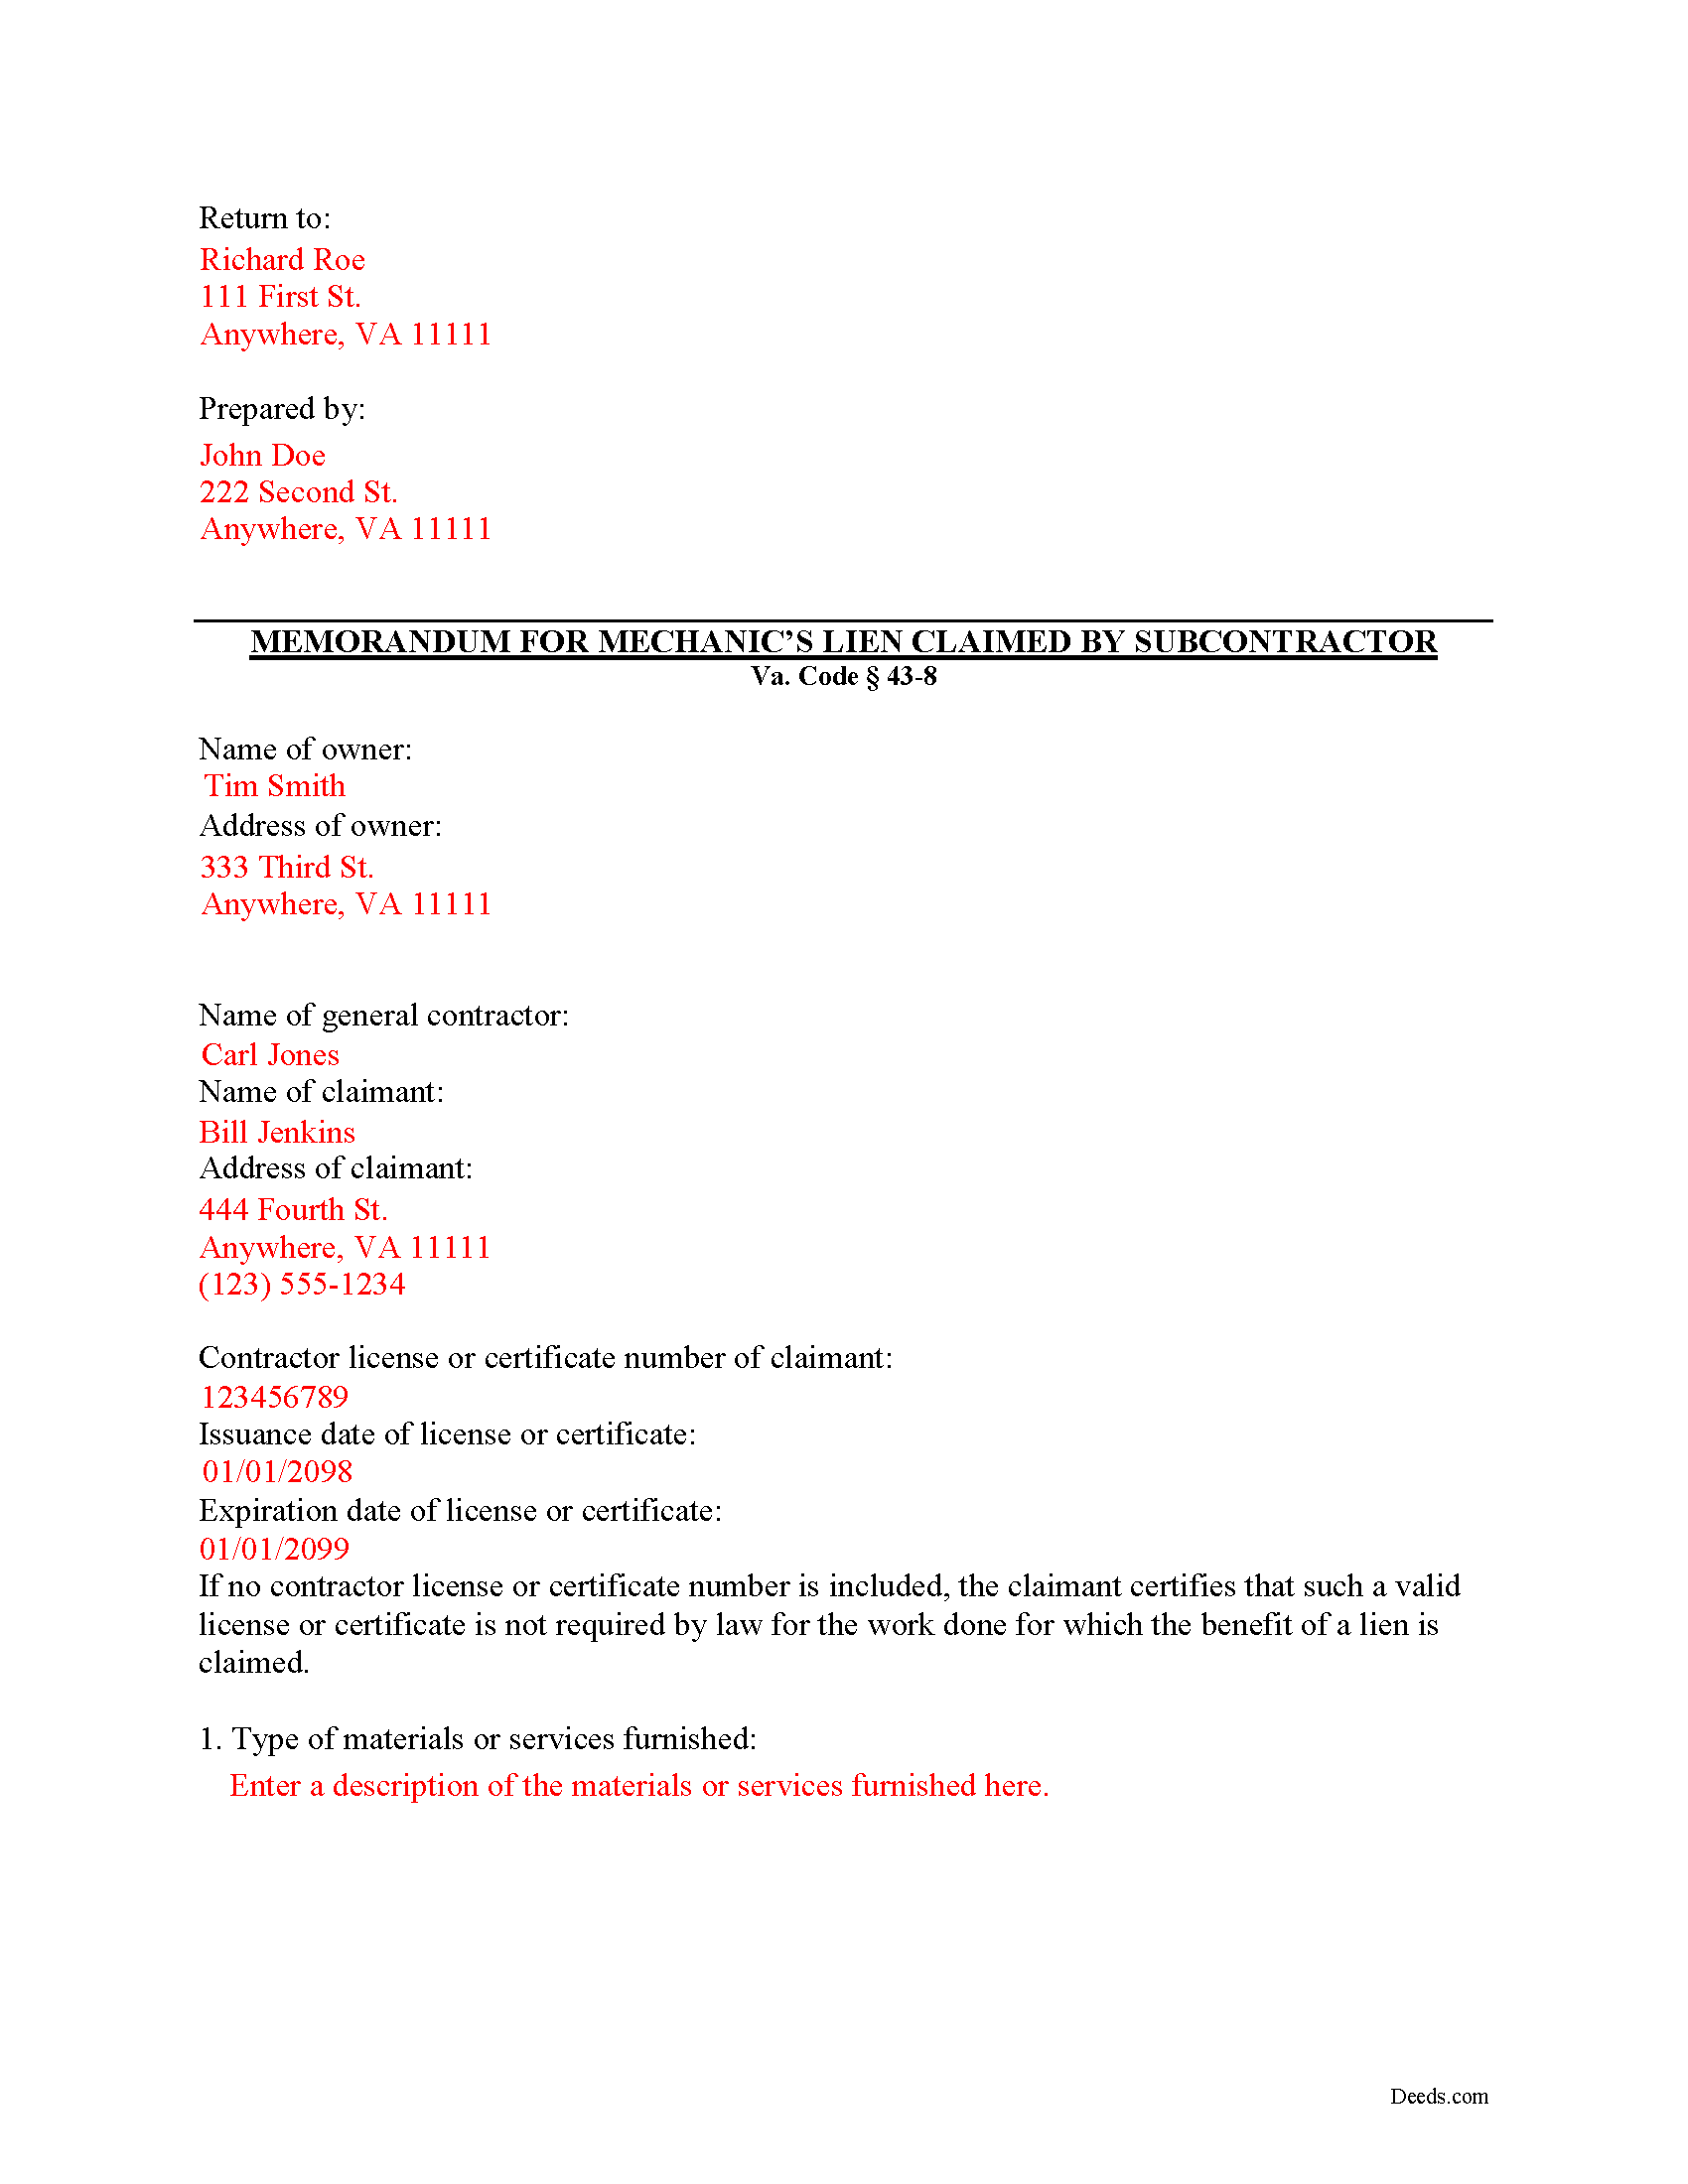 Completed Example of the Memorandum for Mechanics Lien Document